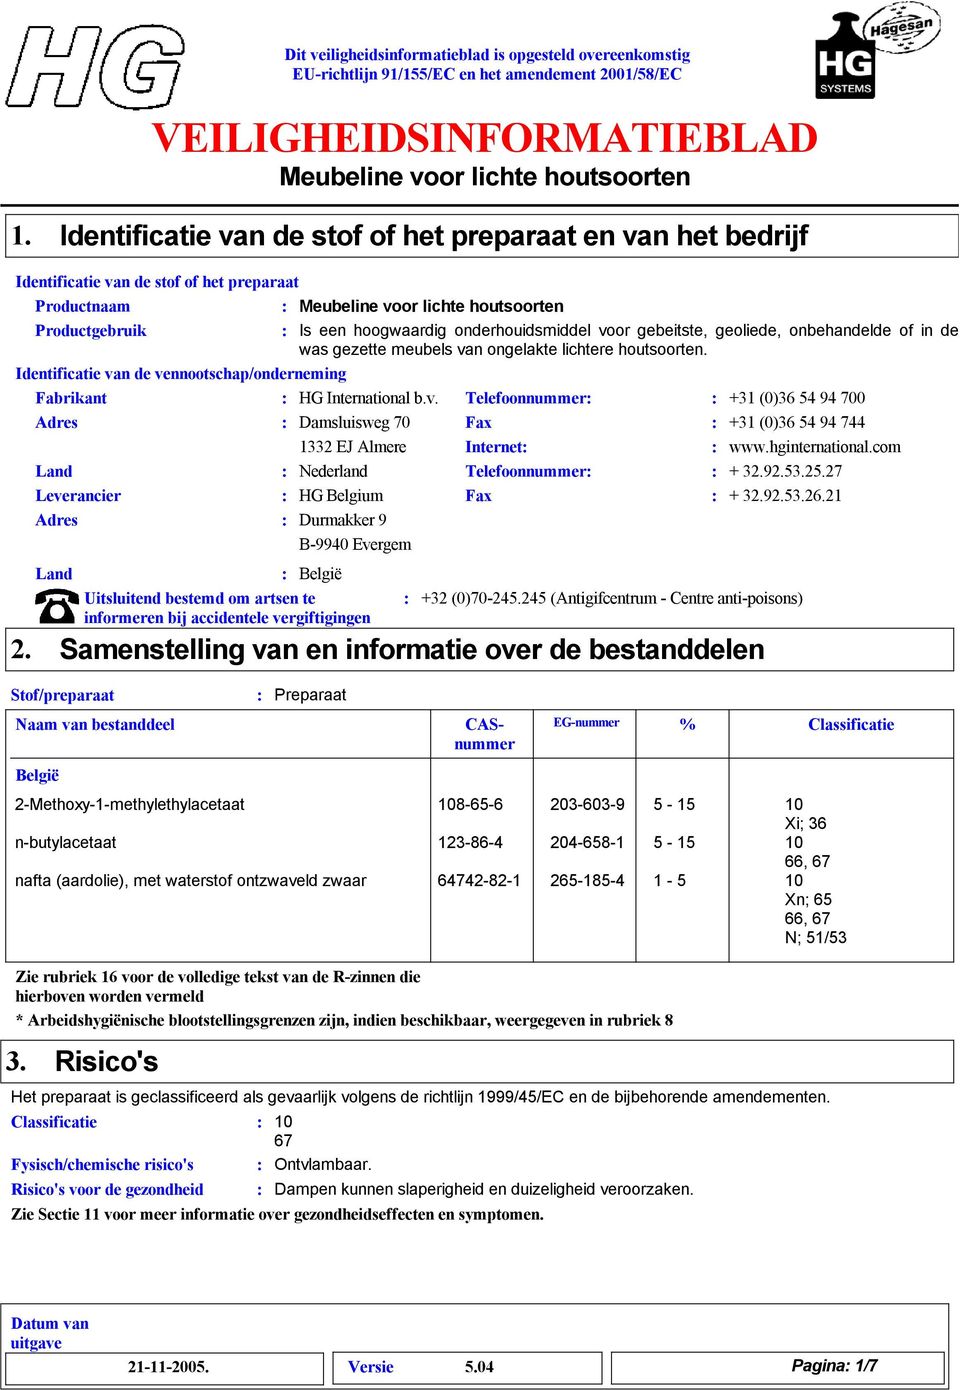 hginternational.com Land Nederland Telefoonnummer + 2.92.5.25.27 Leverancier HG Belgium Fax + 2.92.5.26.21 Adres Durmakker 9 B-9940 Evergem 2.